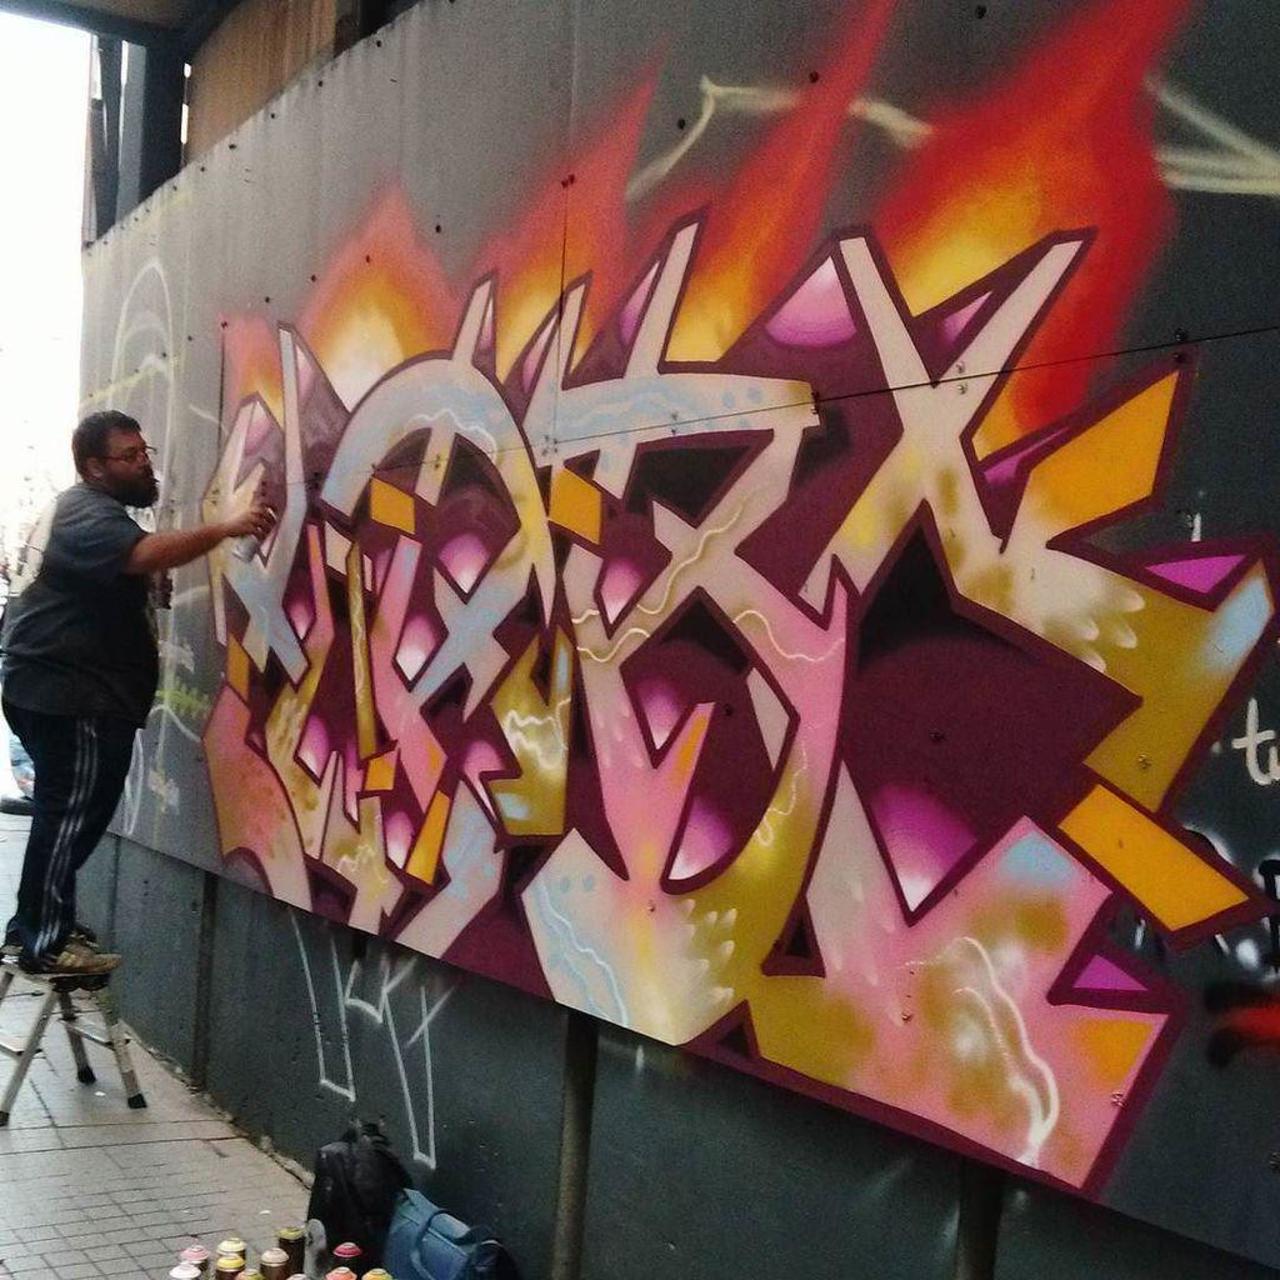 Big boss vol:2 @tuncdindas #graffitiart #graffiti #street #streetart #streetartistanbul #istiklalcaddesi #turbo by … http://t.co/YFLLkThZ8k